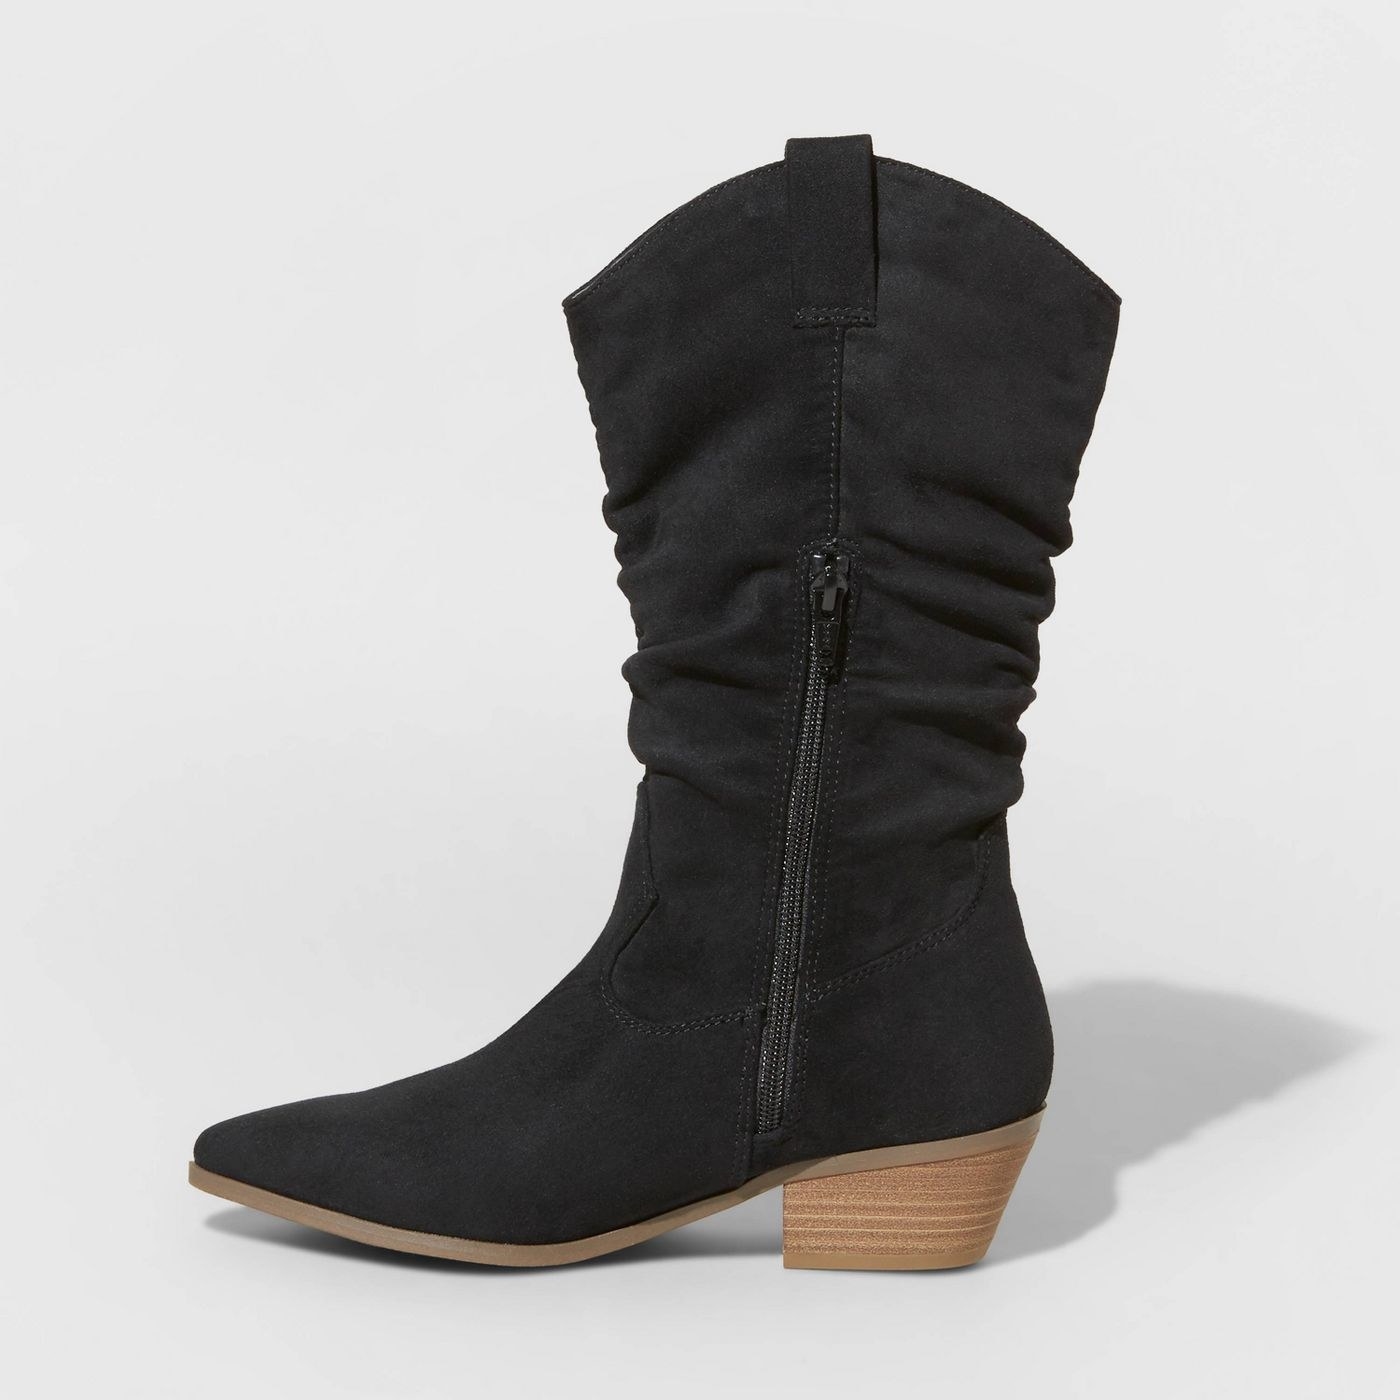 A black western heeled boot